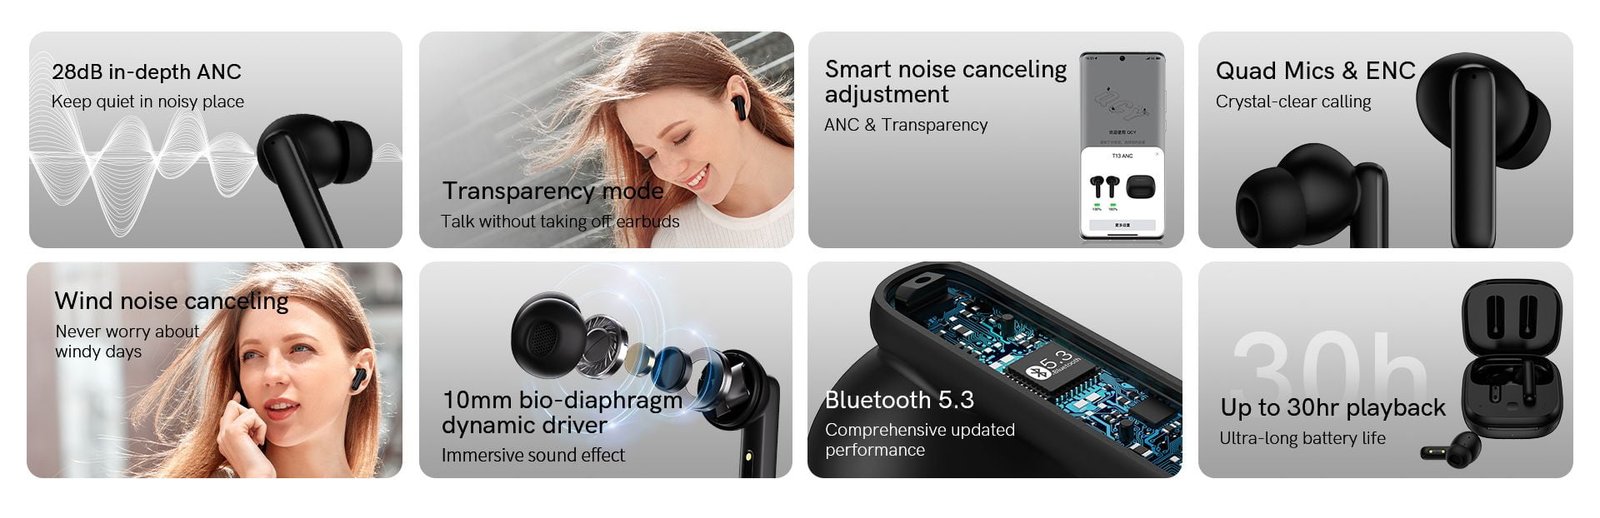 QCY T13 Wireless Earphones Bluetooth 5.3 TWS ANC Noise Cancellation  Headphone